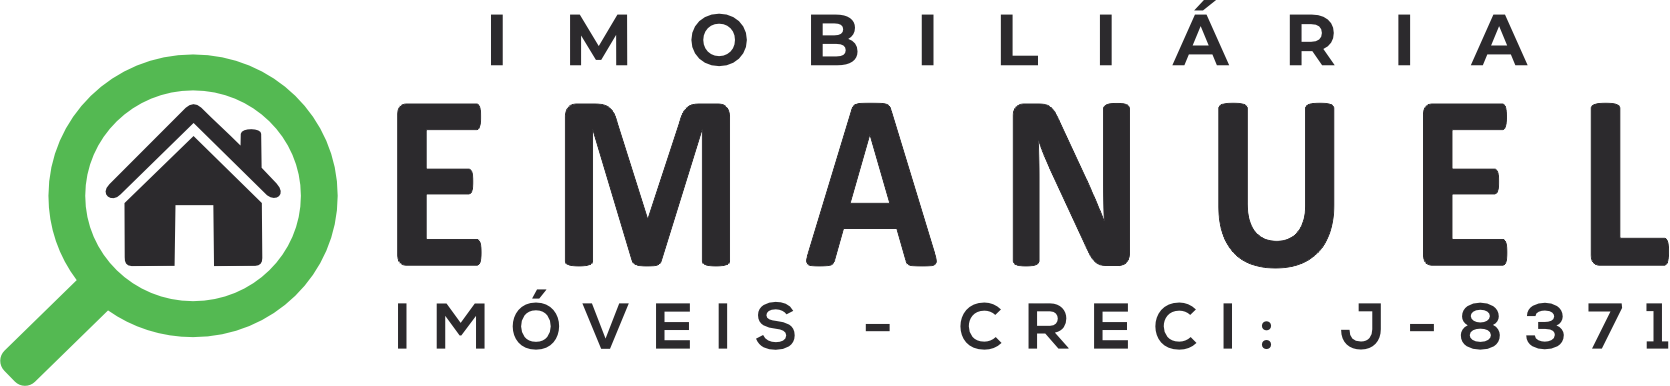 Logo imobiliaria emanuel